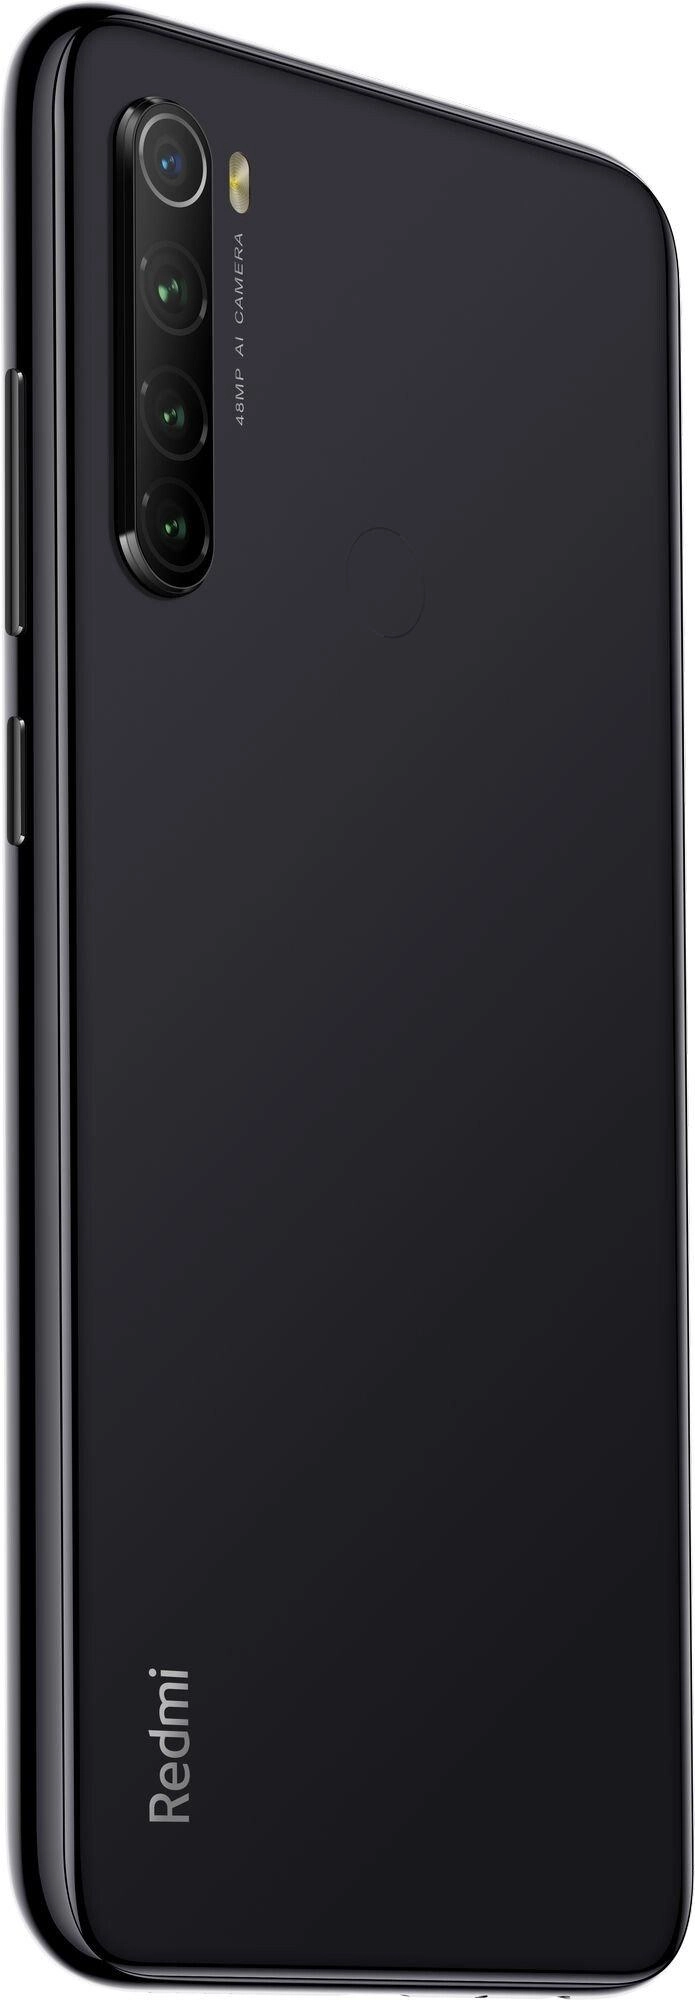 Смартфон Xiaomi Redmi Note 8 3/32Gb Space Black заказать